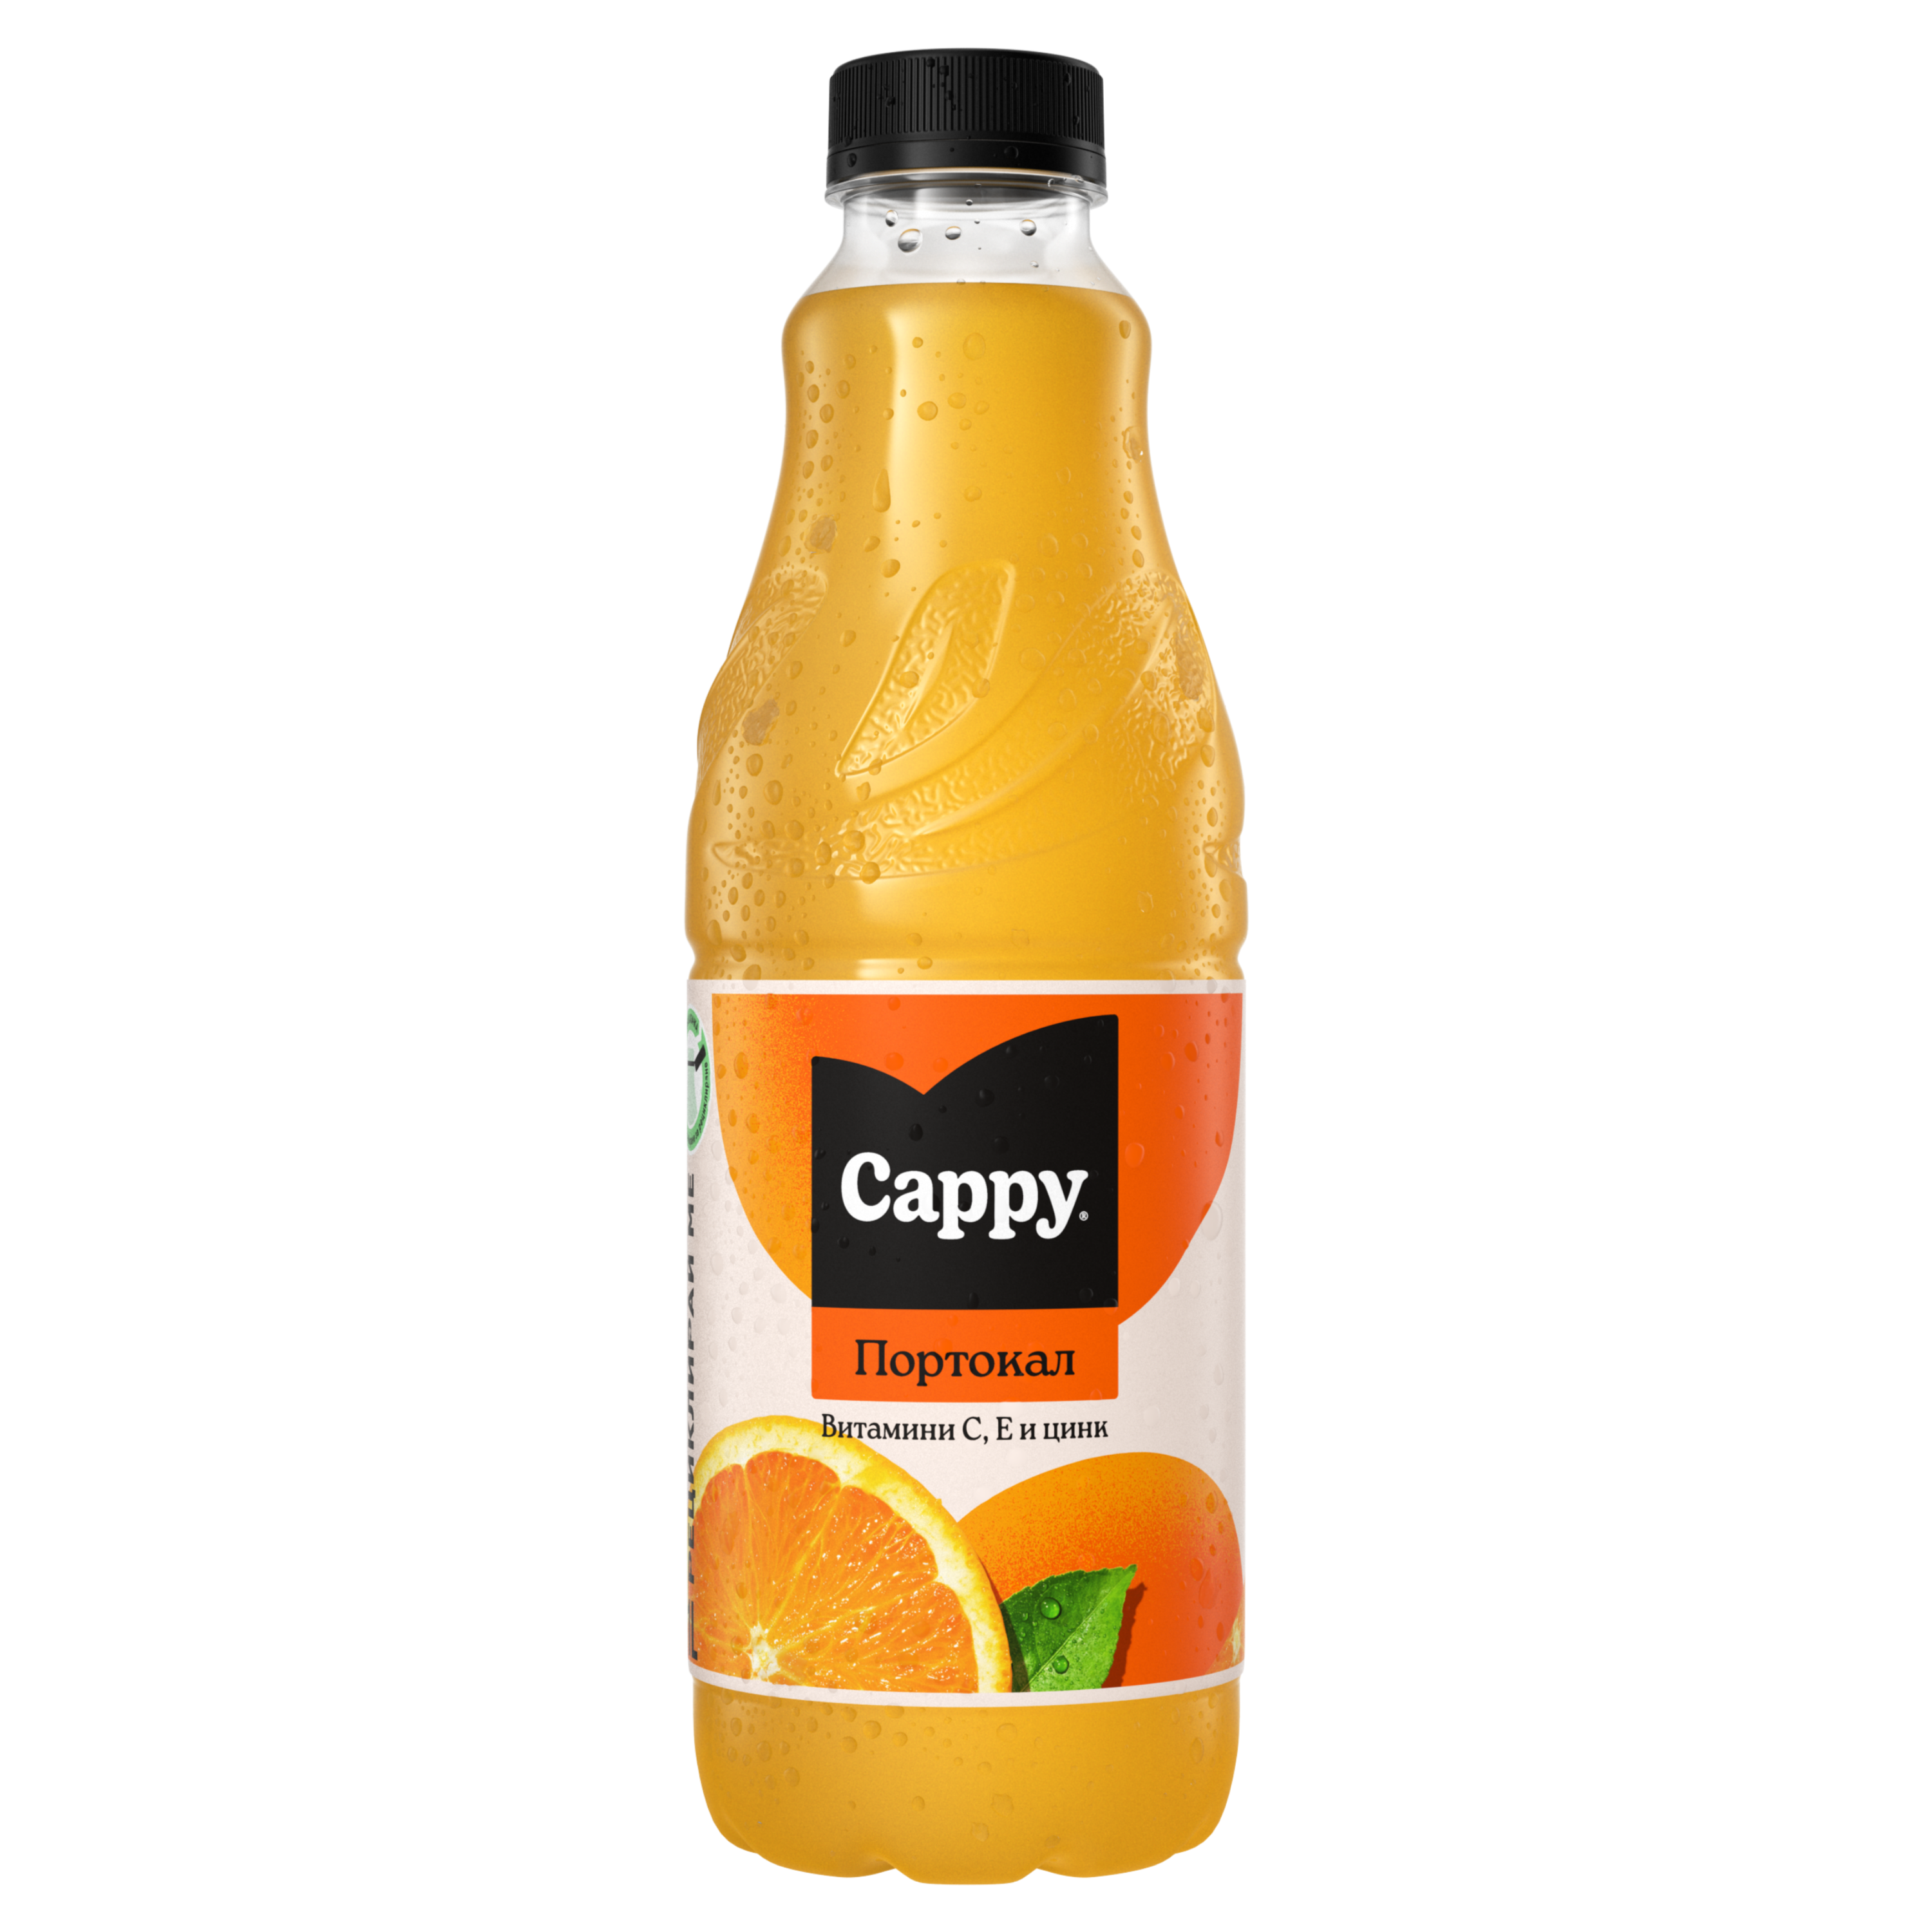 Cappy Портокал